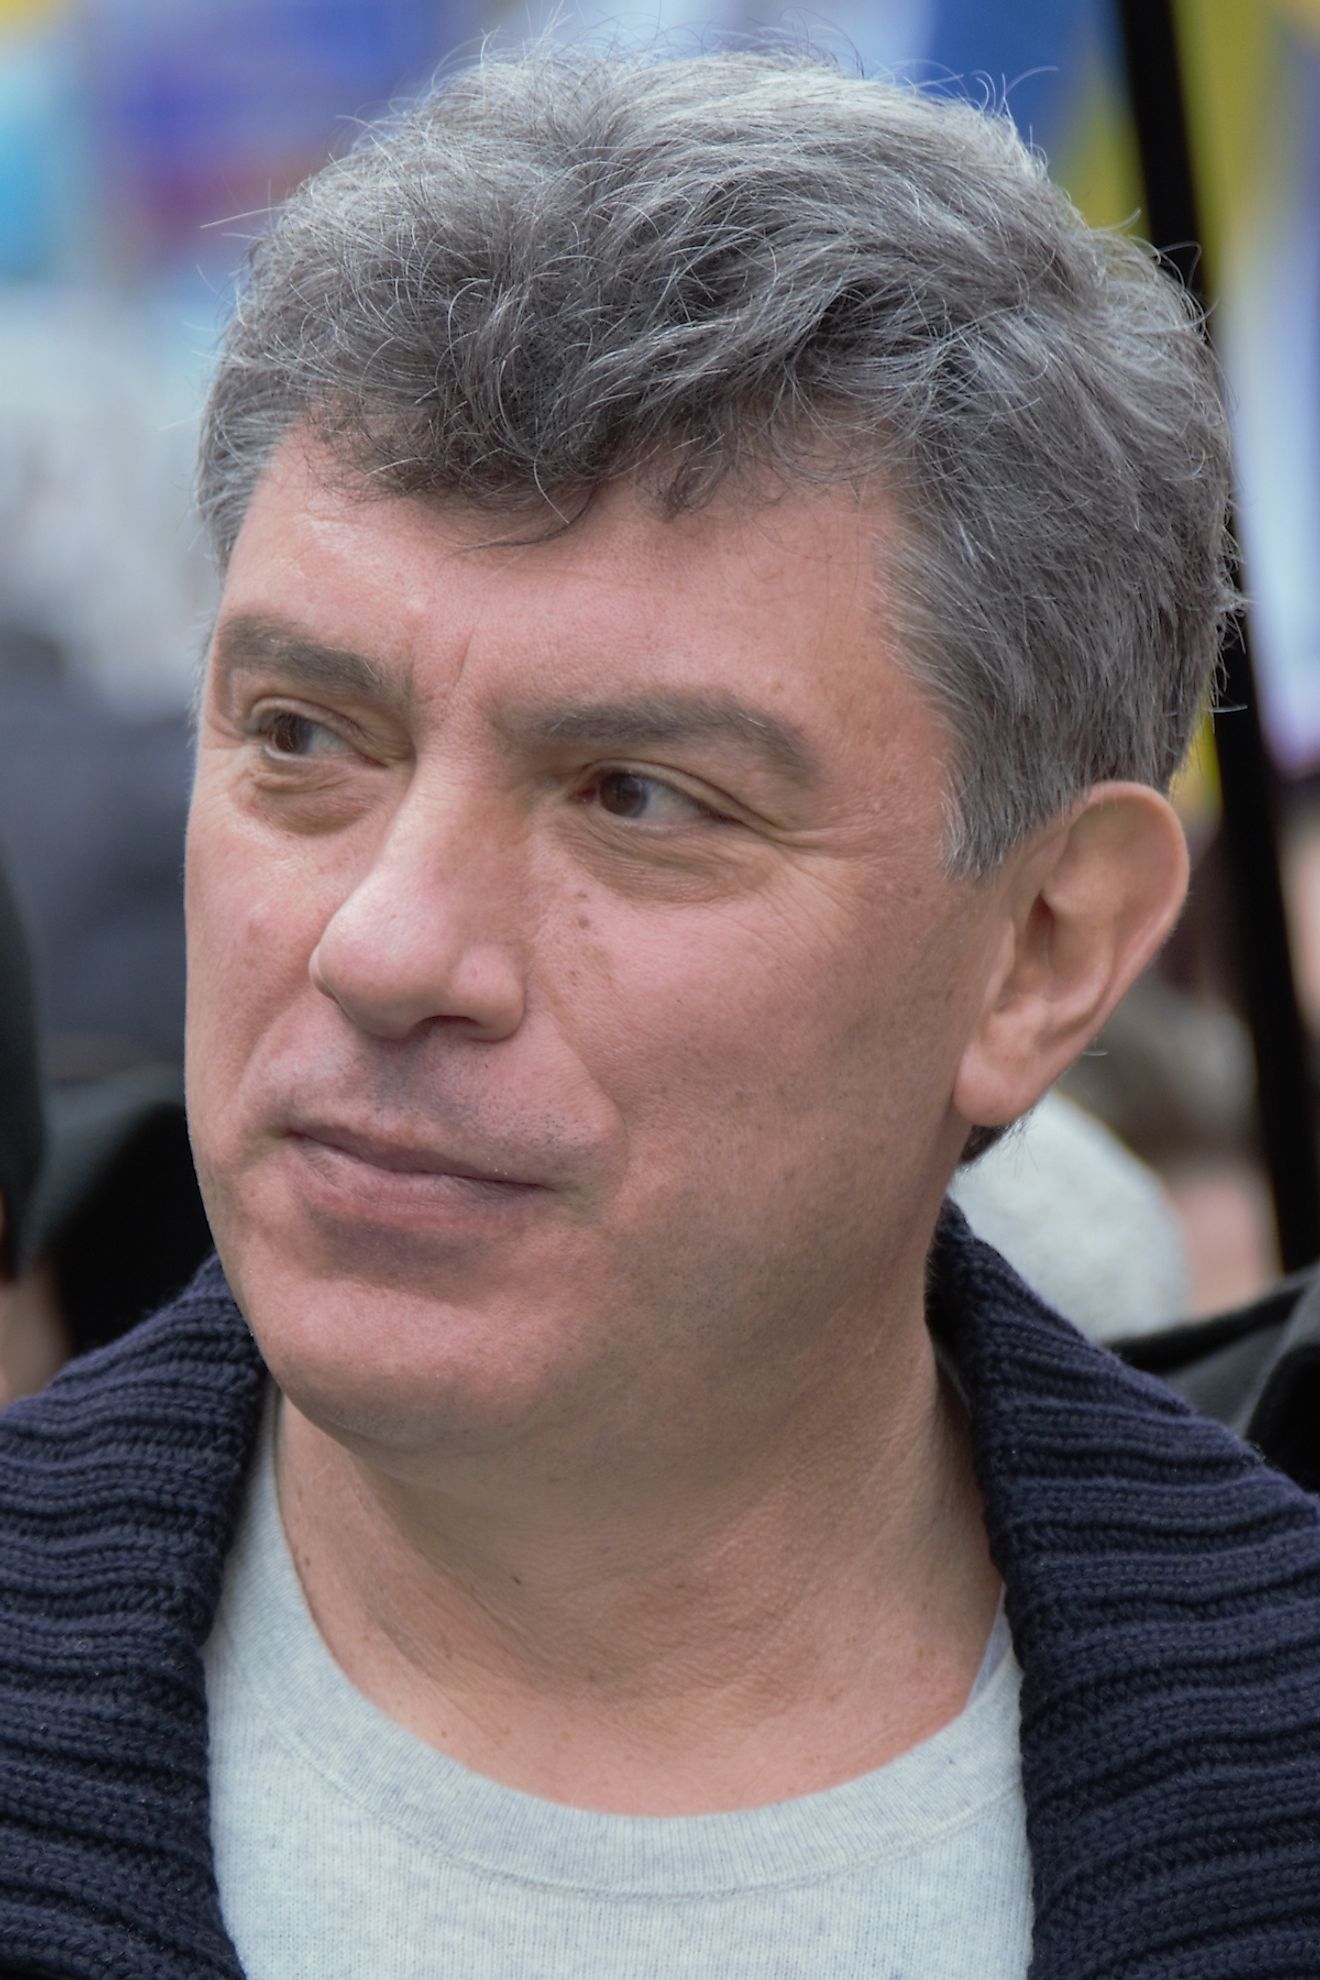 Boris Nemtsov. Image credit: Dhārmikatva/Wikimedia.org